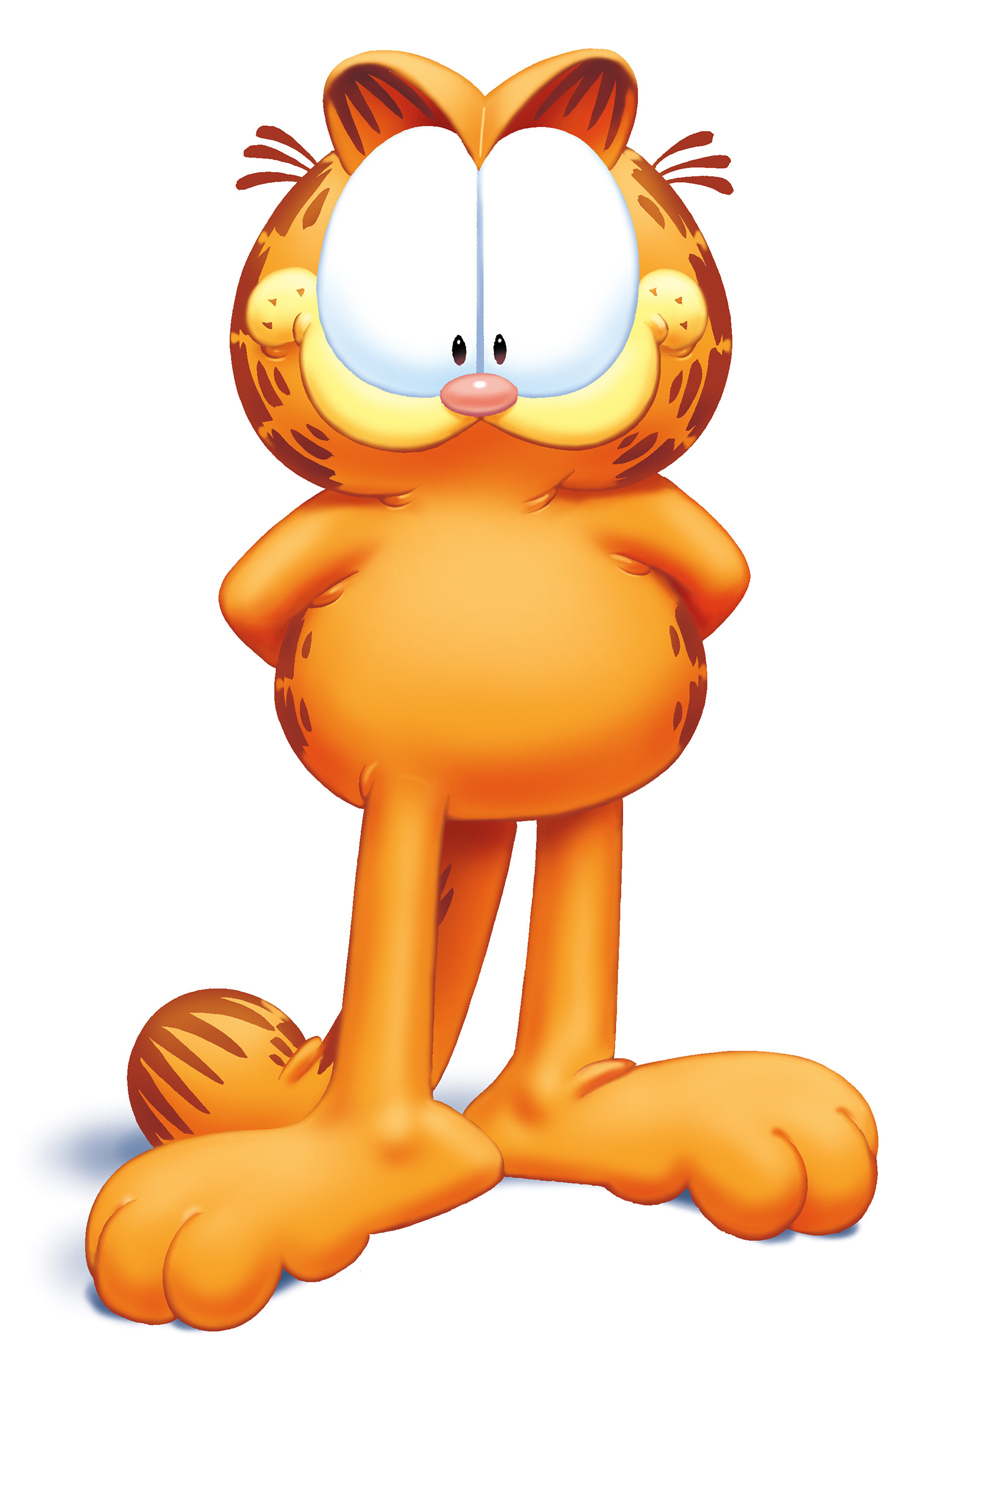 Garfield cartoon